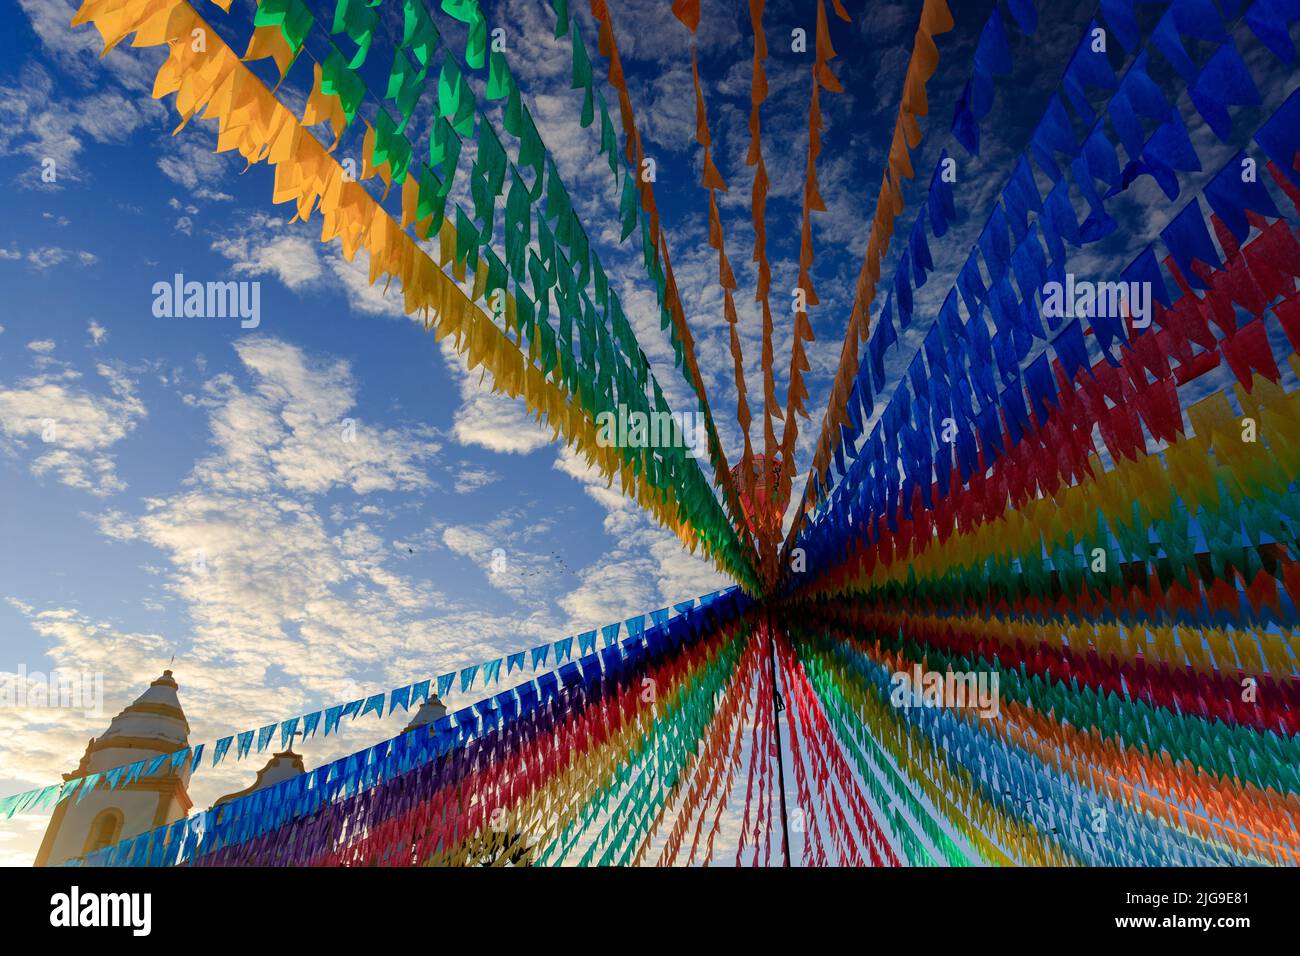 decoration of são joão - colorful flags and decorative balloon decorate festa junina in brazil Stock Photo